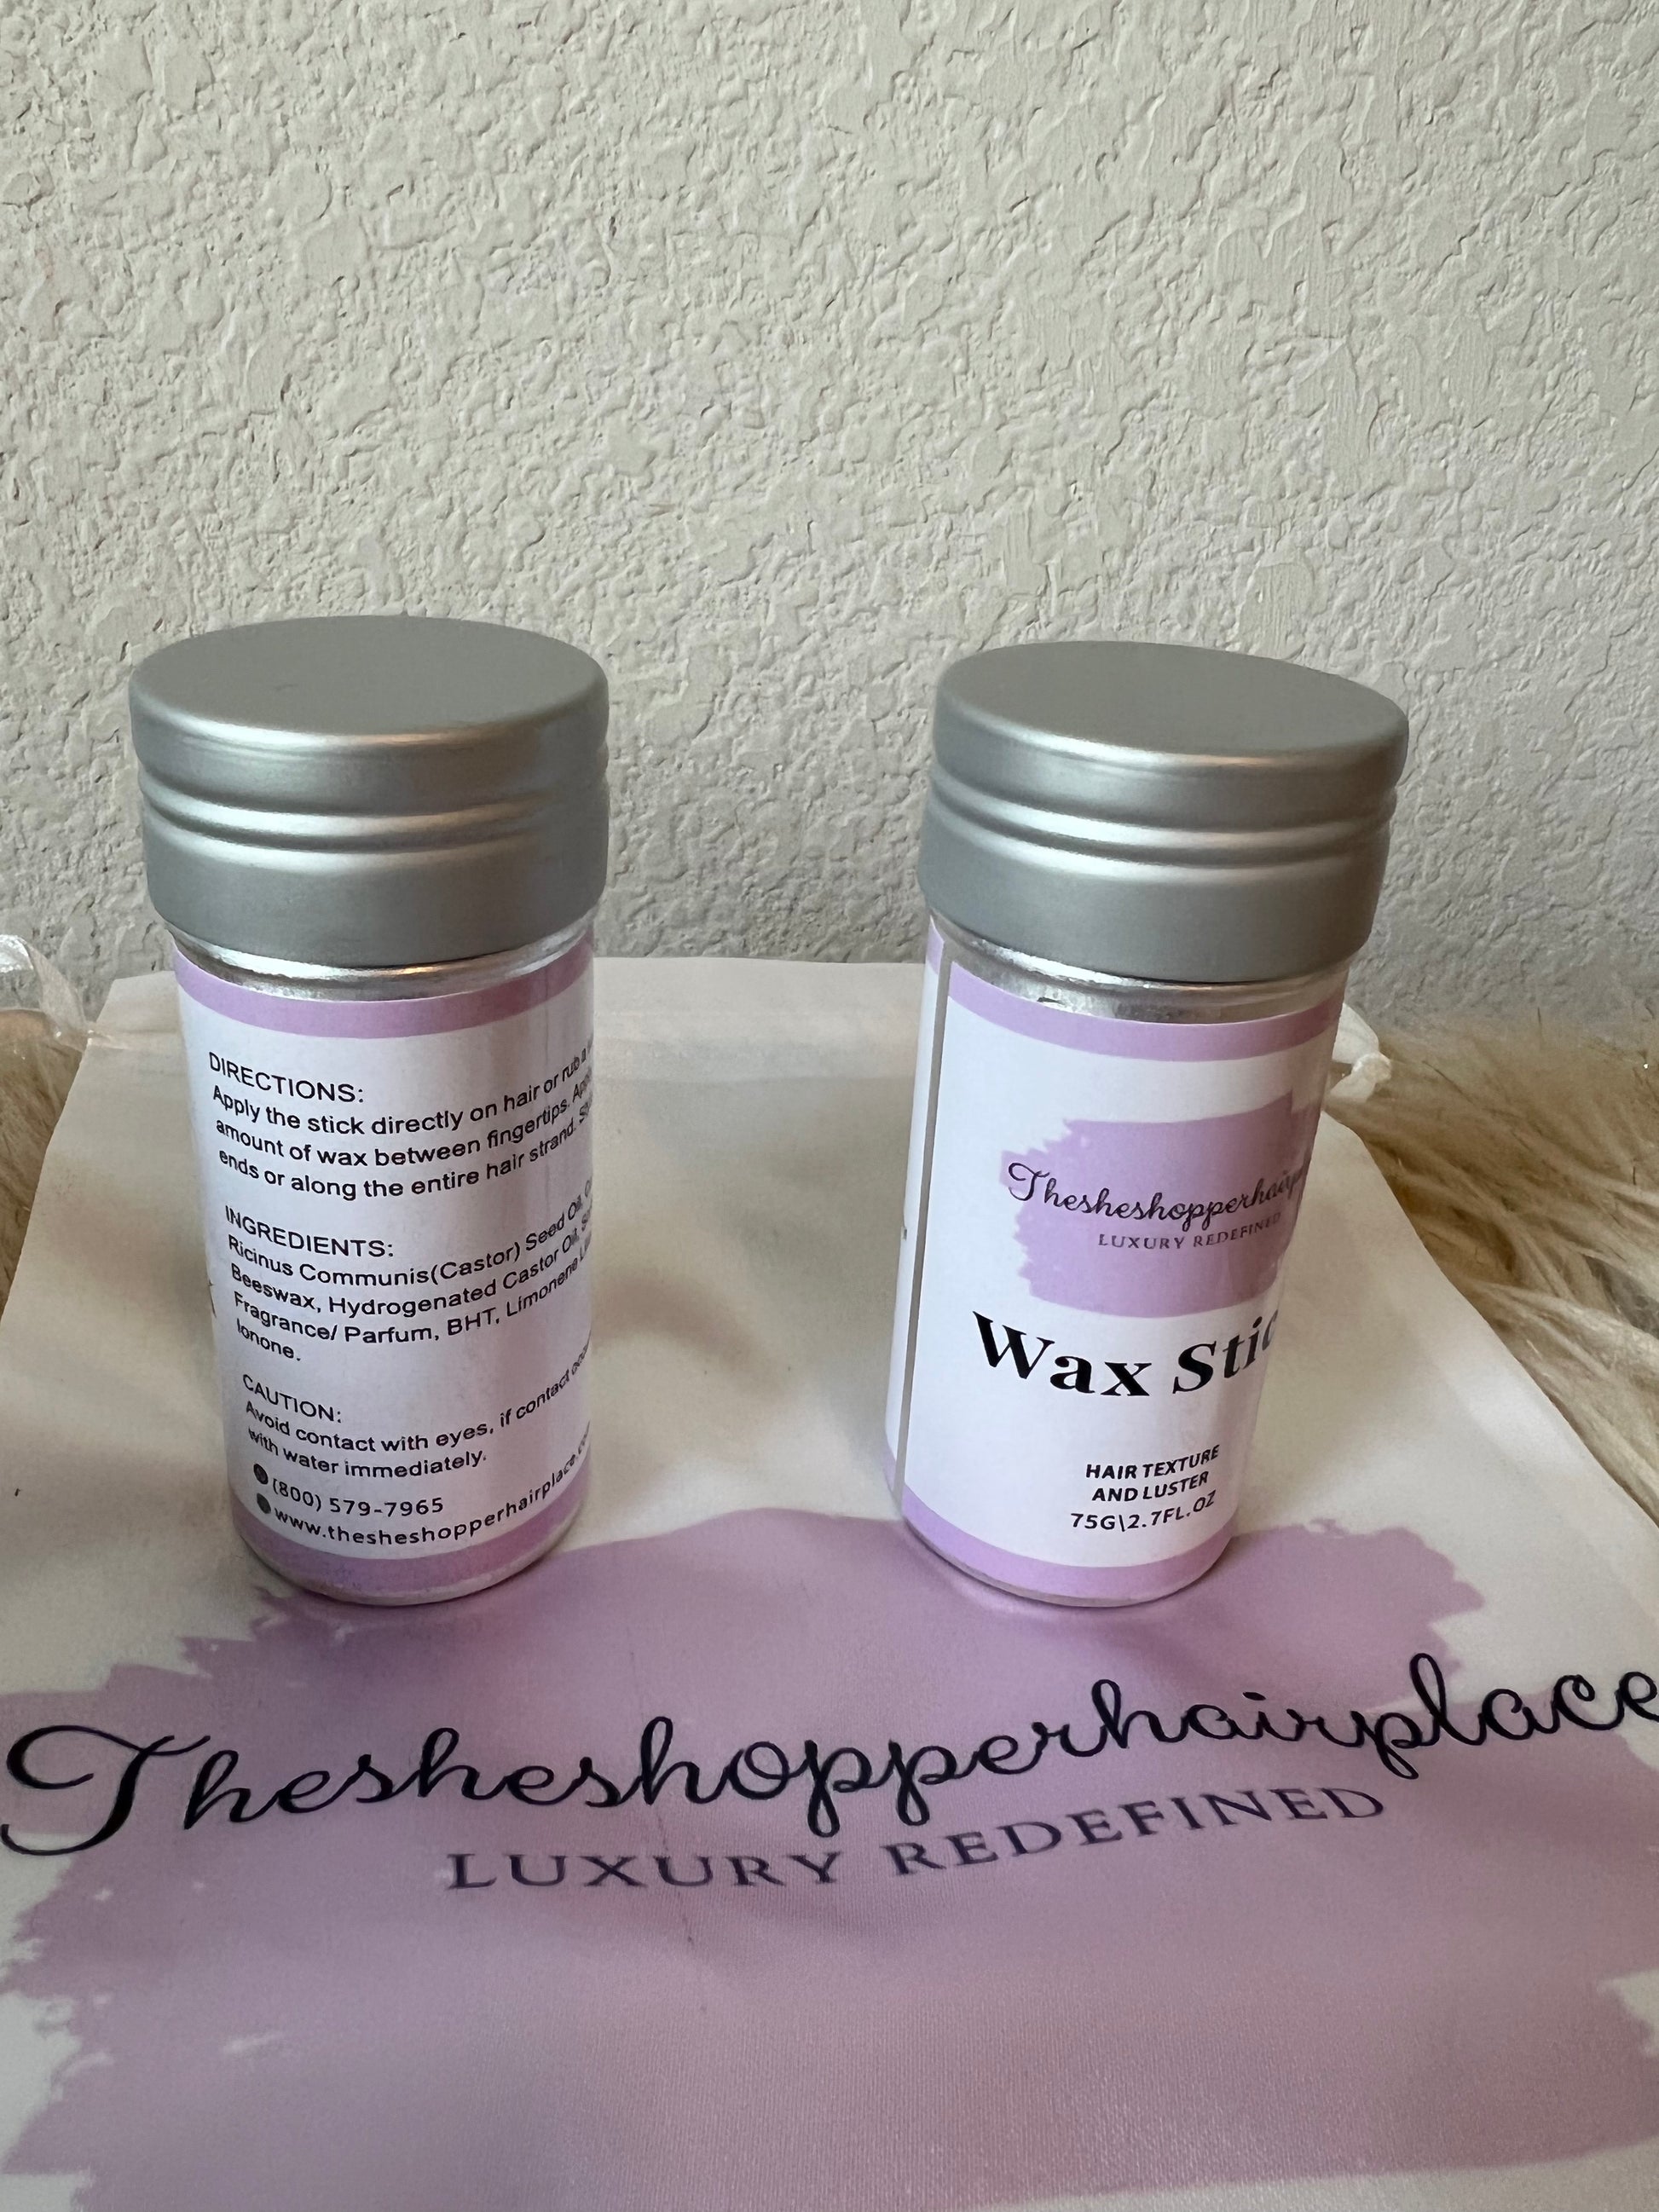 Wax stick - sheshopperhairplace LLC